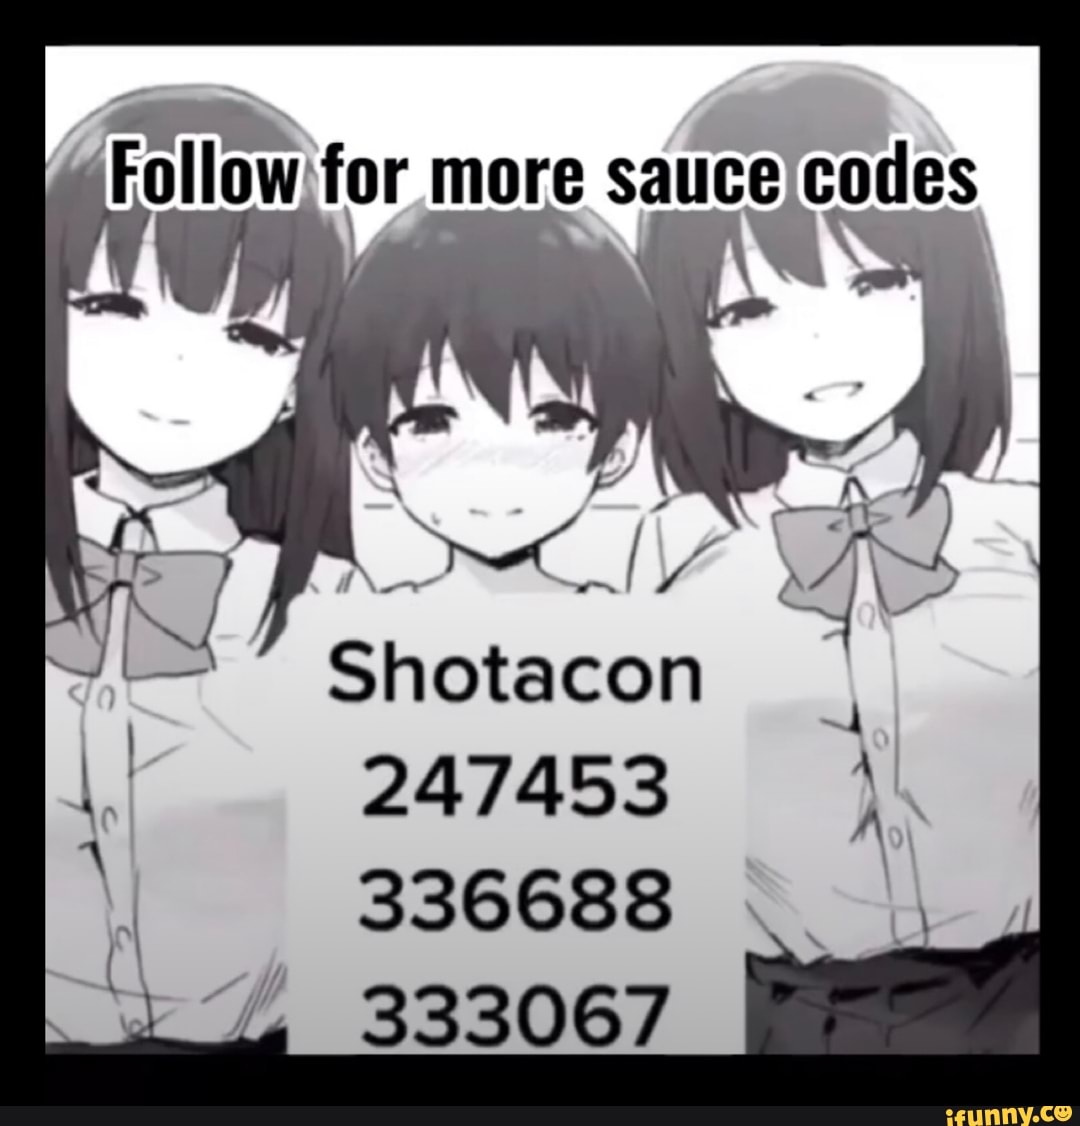 Follow for more sauce codes Shotacon 247453 336688 333067 - iFunny